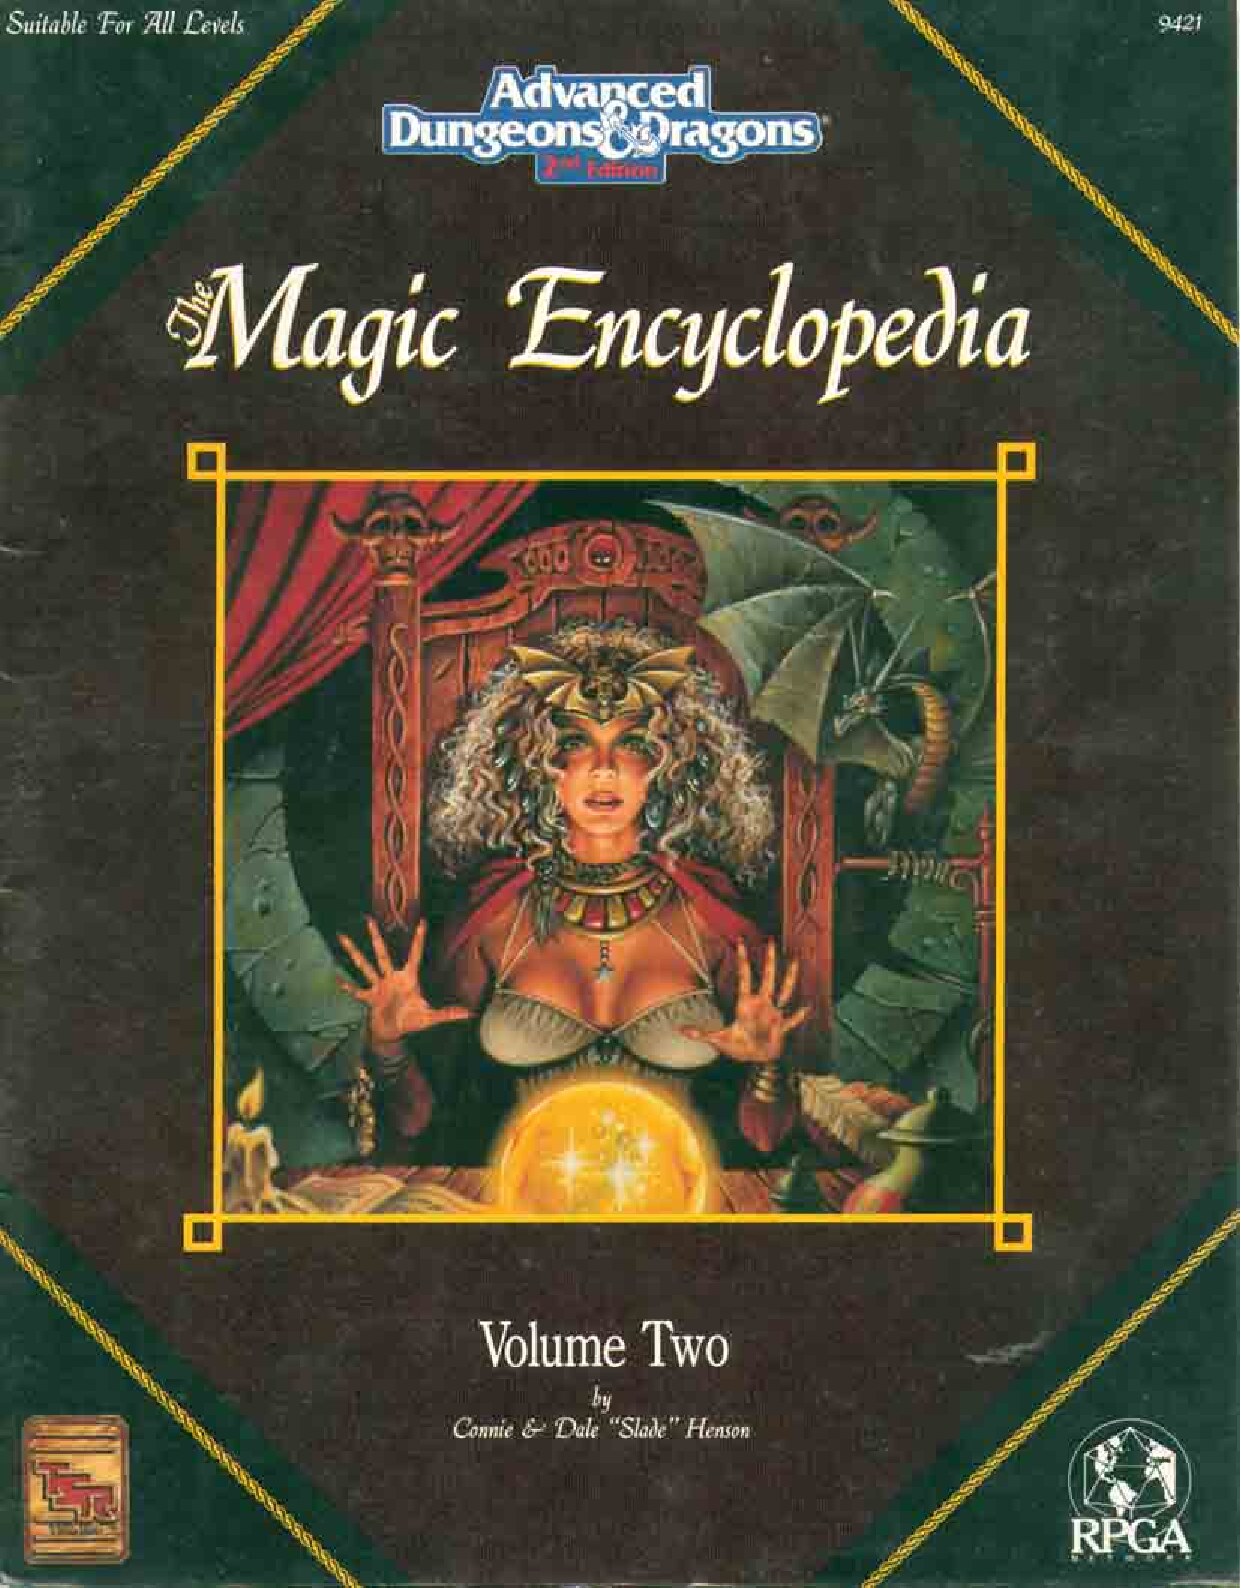 The Magic Encyclopedia - Volume 2 (9421)